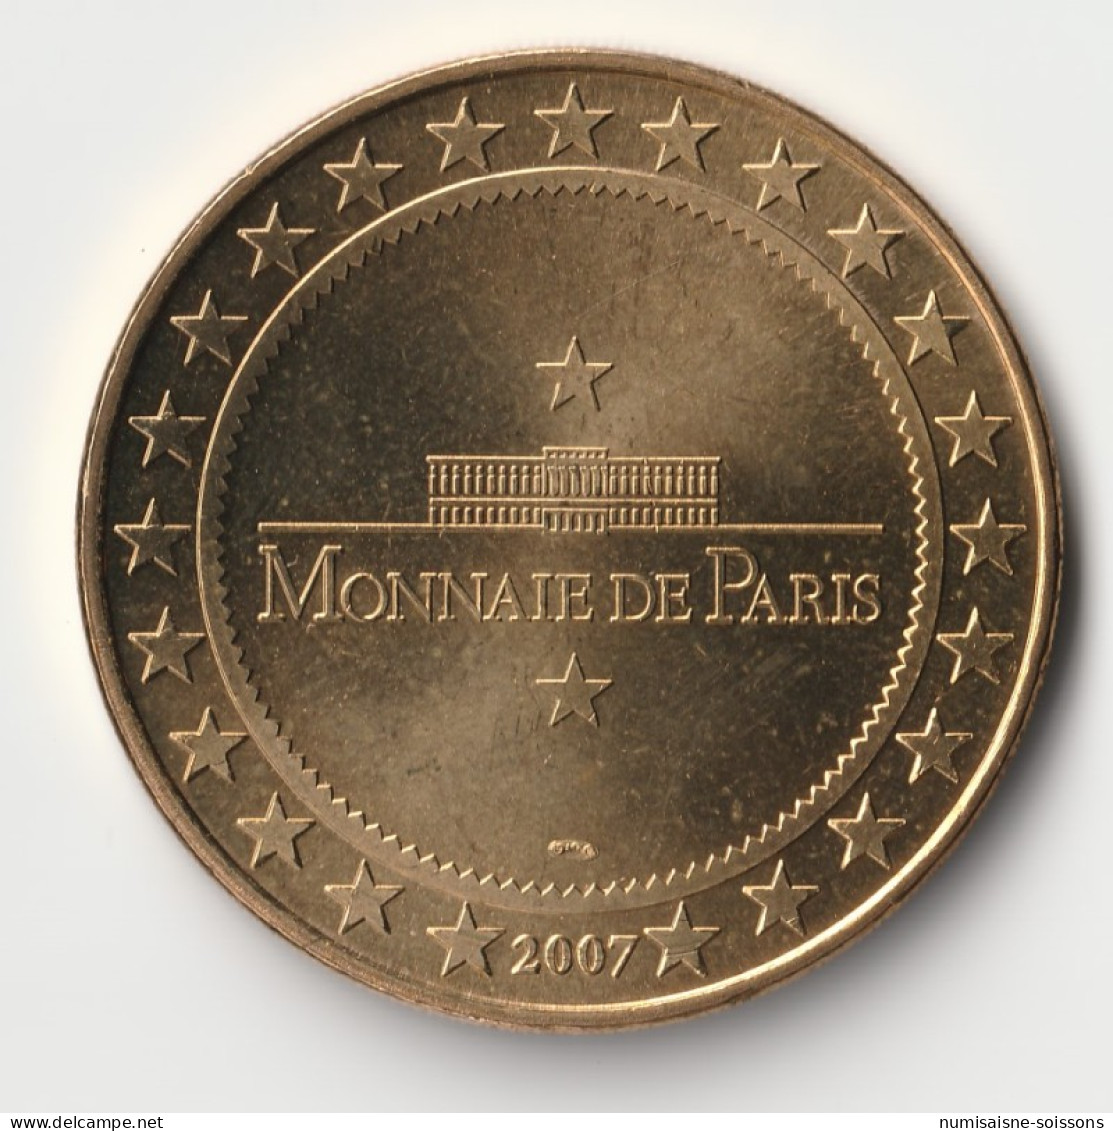 11 - SAINT-HILAIRE - PAYS CATHARE - ABBAYE - MONNAIE DE PARIS - 2007 - 2007